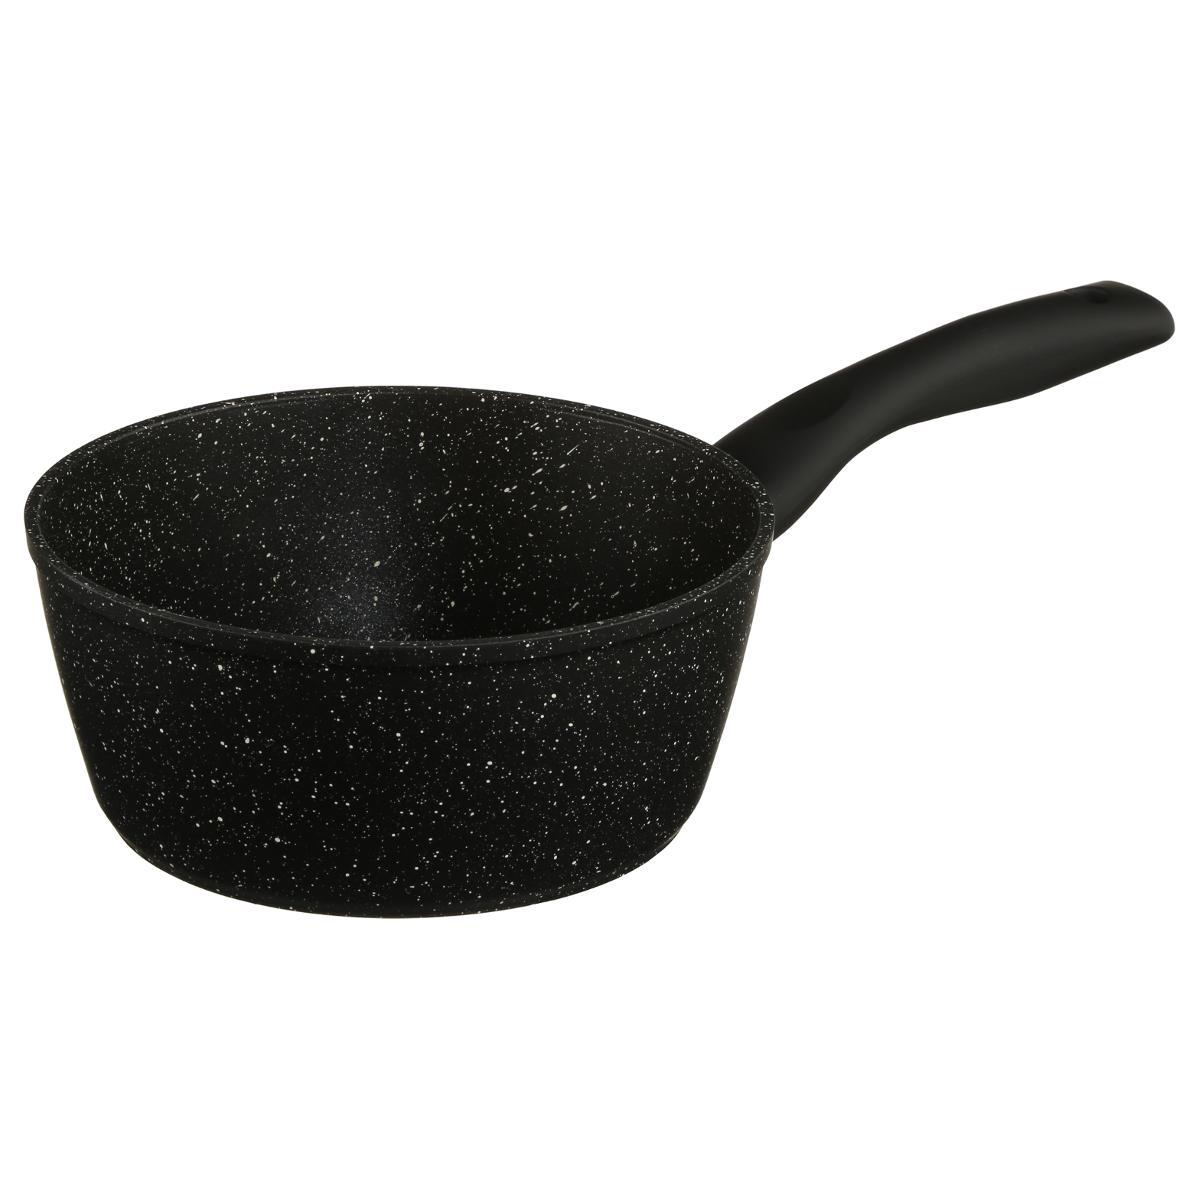 FLONAL Frying Pan, Medium, Clear